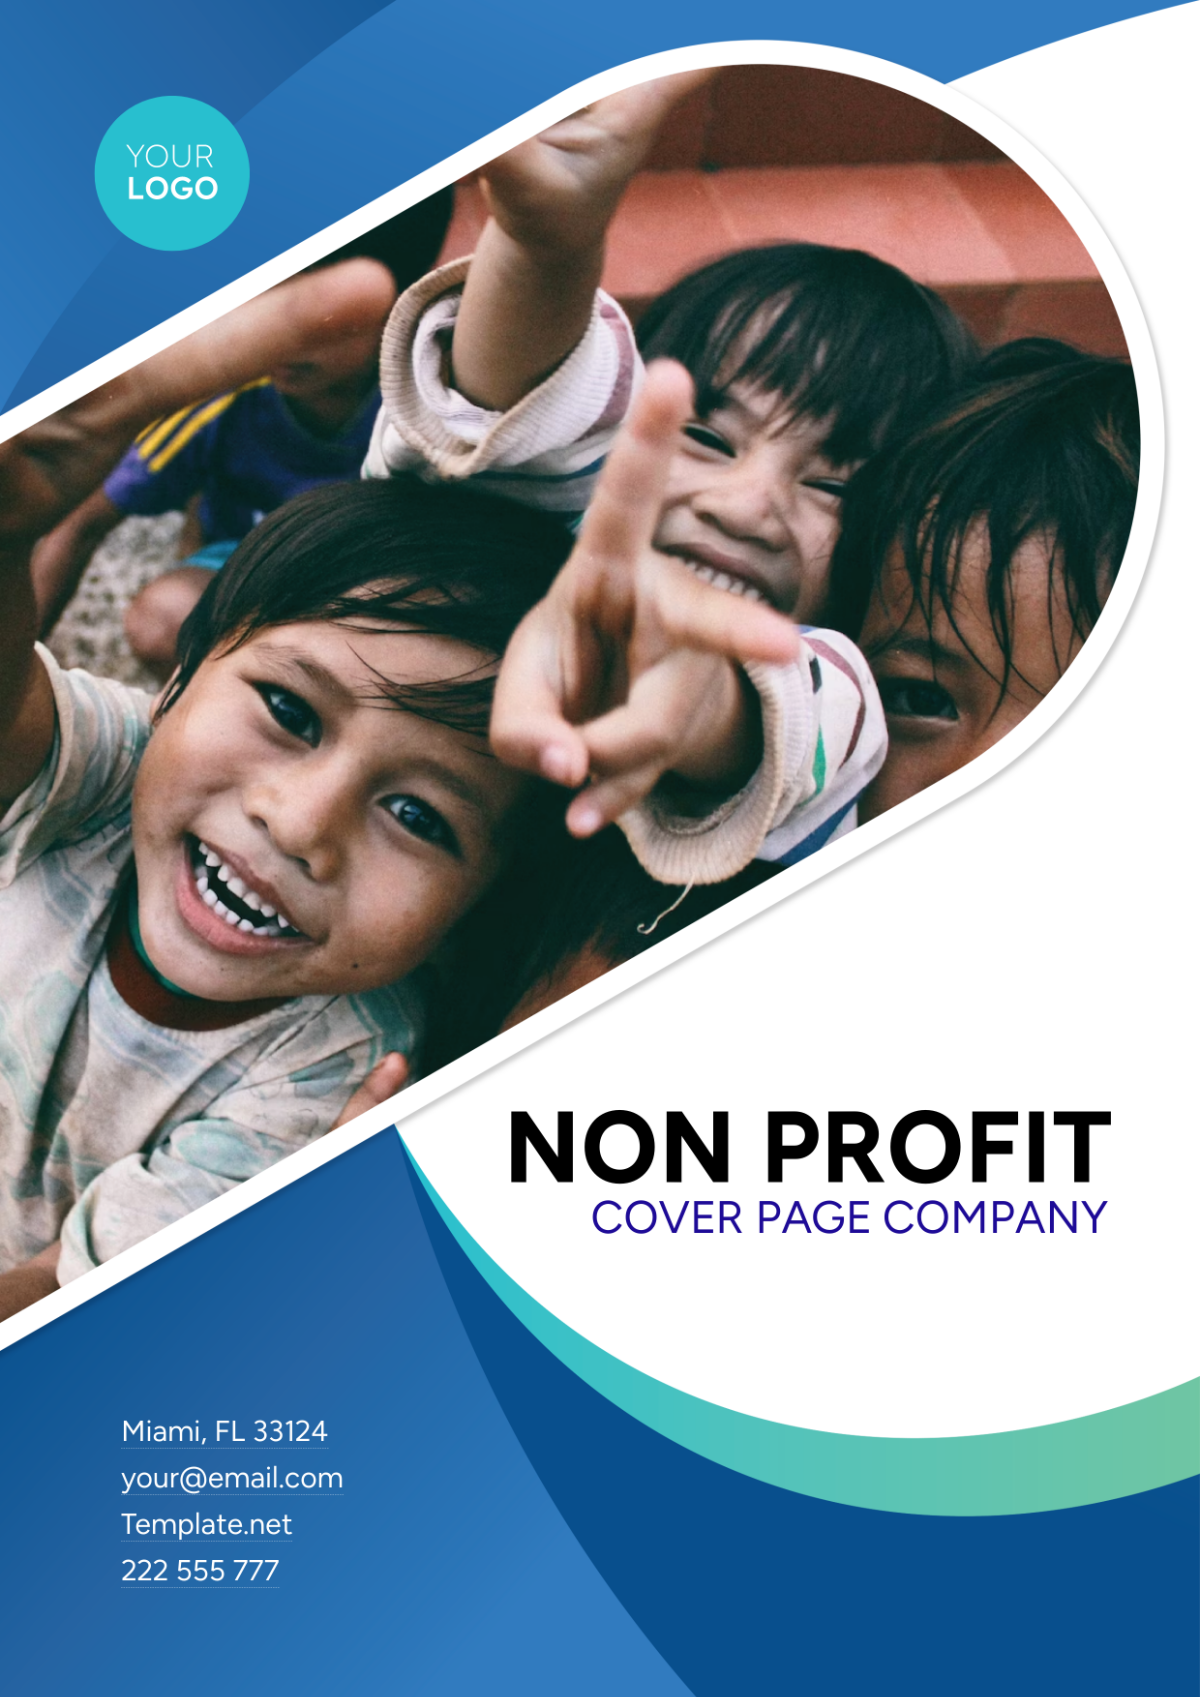 Nonprofit Cover Page Company